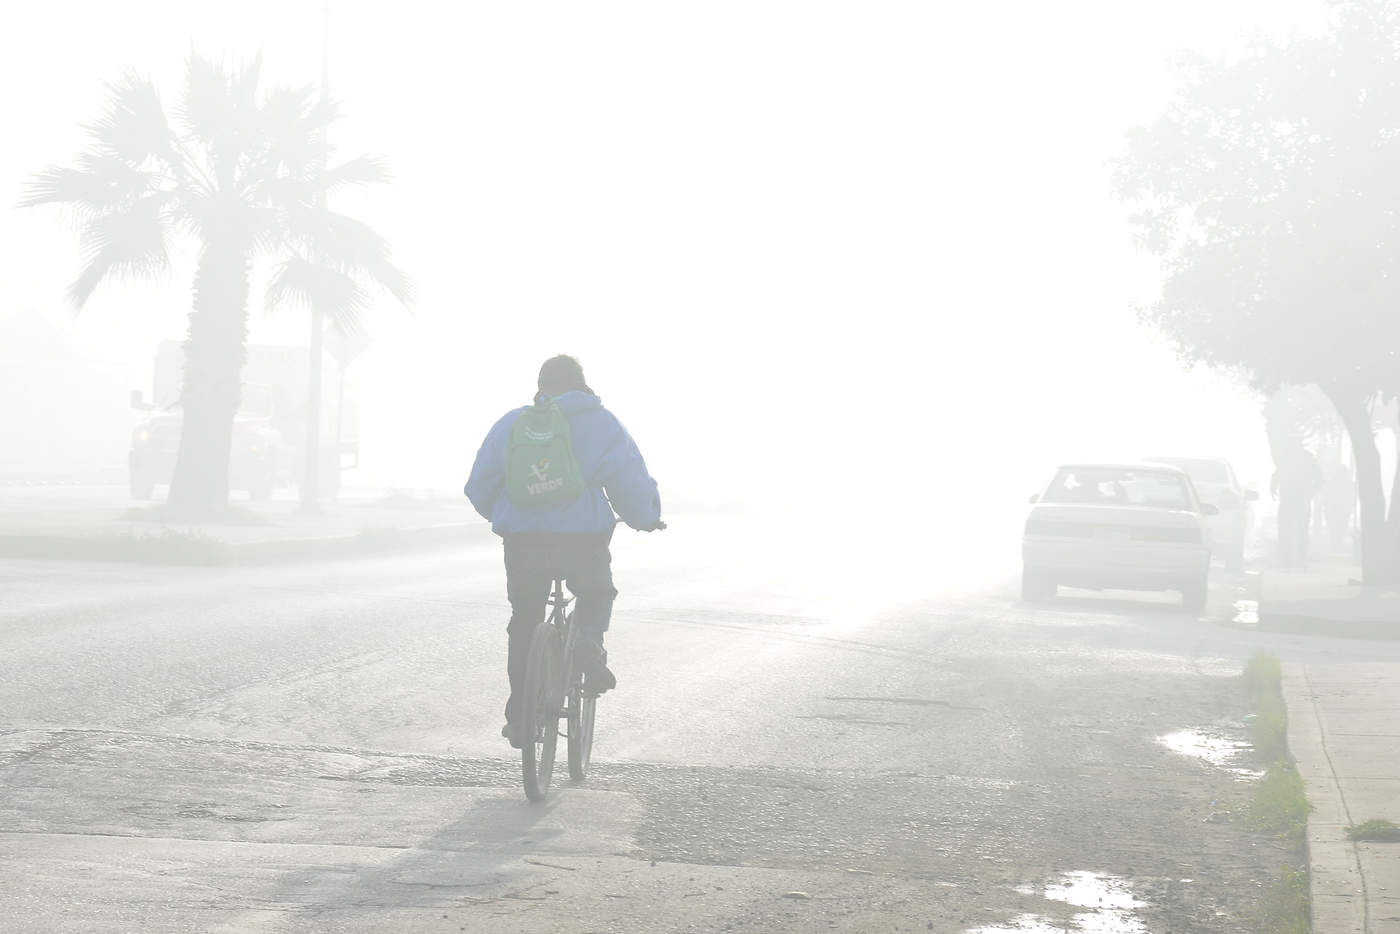 Este jueves se volvió a registrar neblina en Torreón. (FERNANDO COMPEÁN) 

